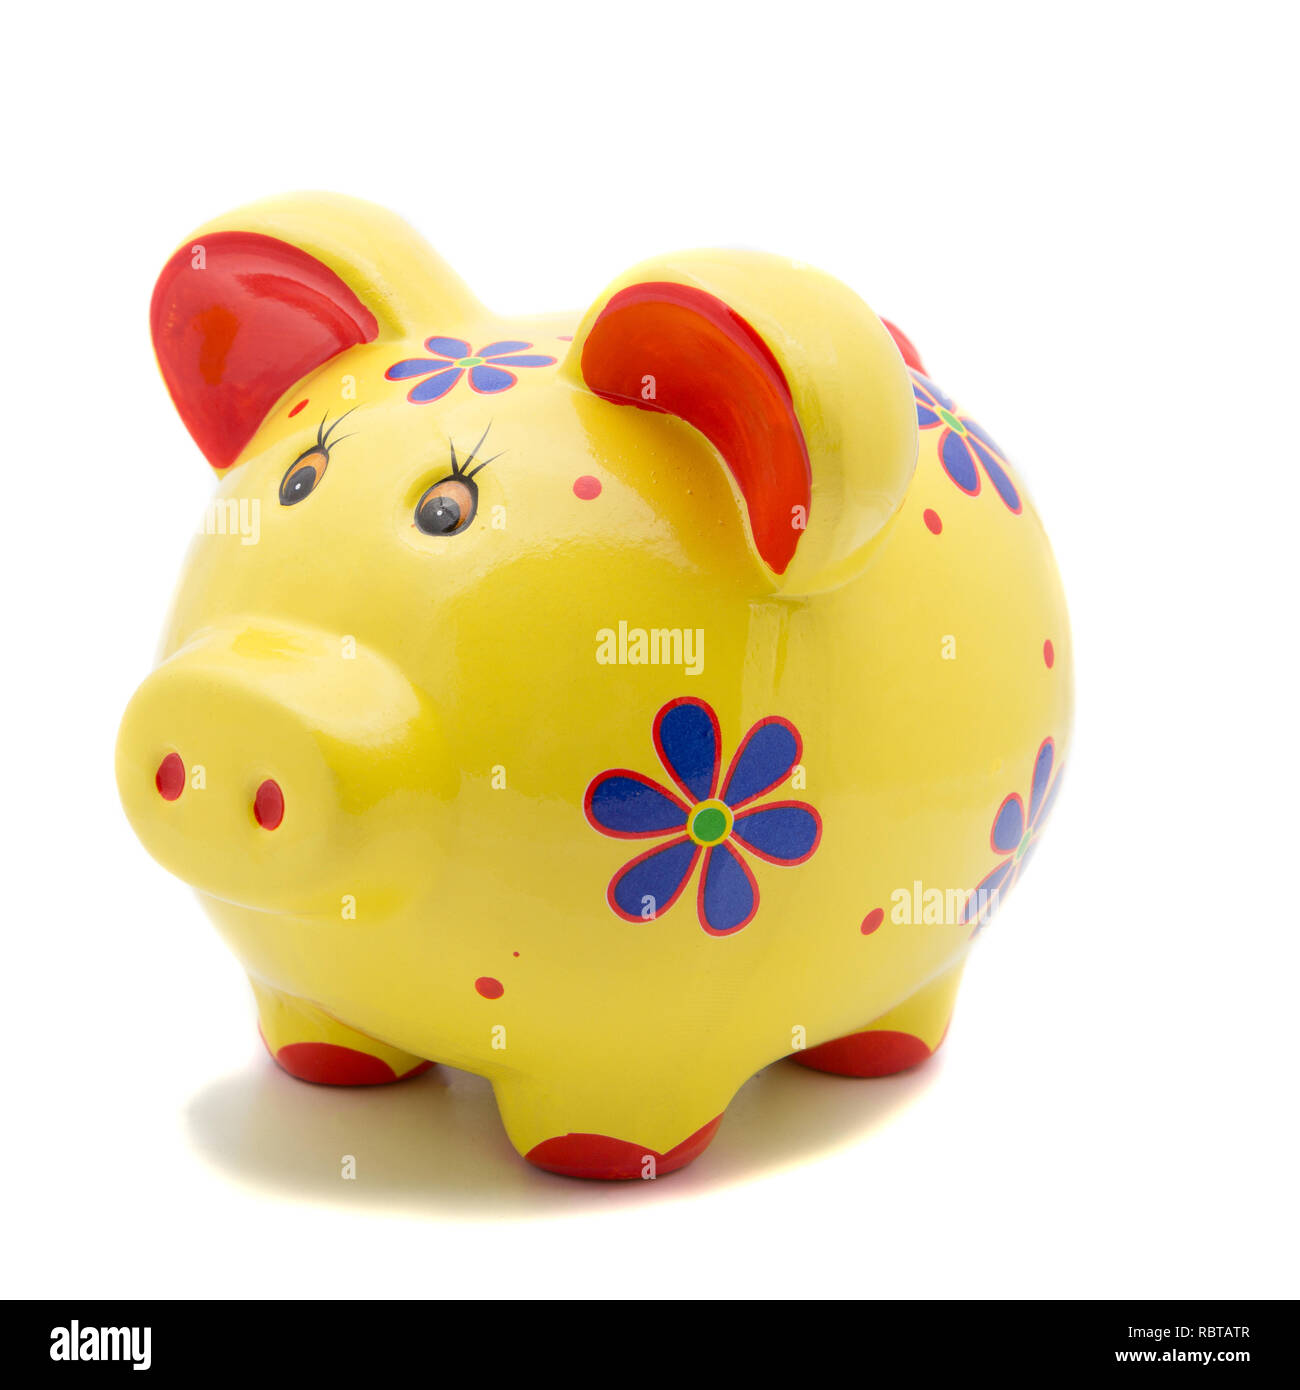 Ceramic Money Jar Piggy Bank Soft Yellow Ceramic Save Save $$ Pot of Dreams 